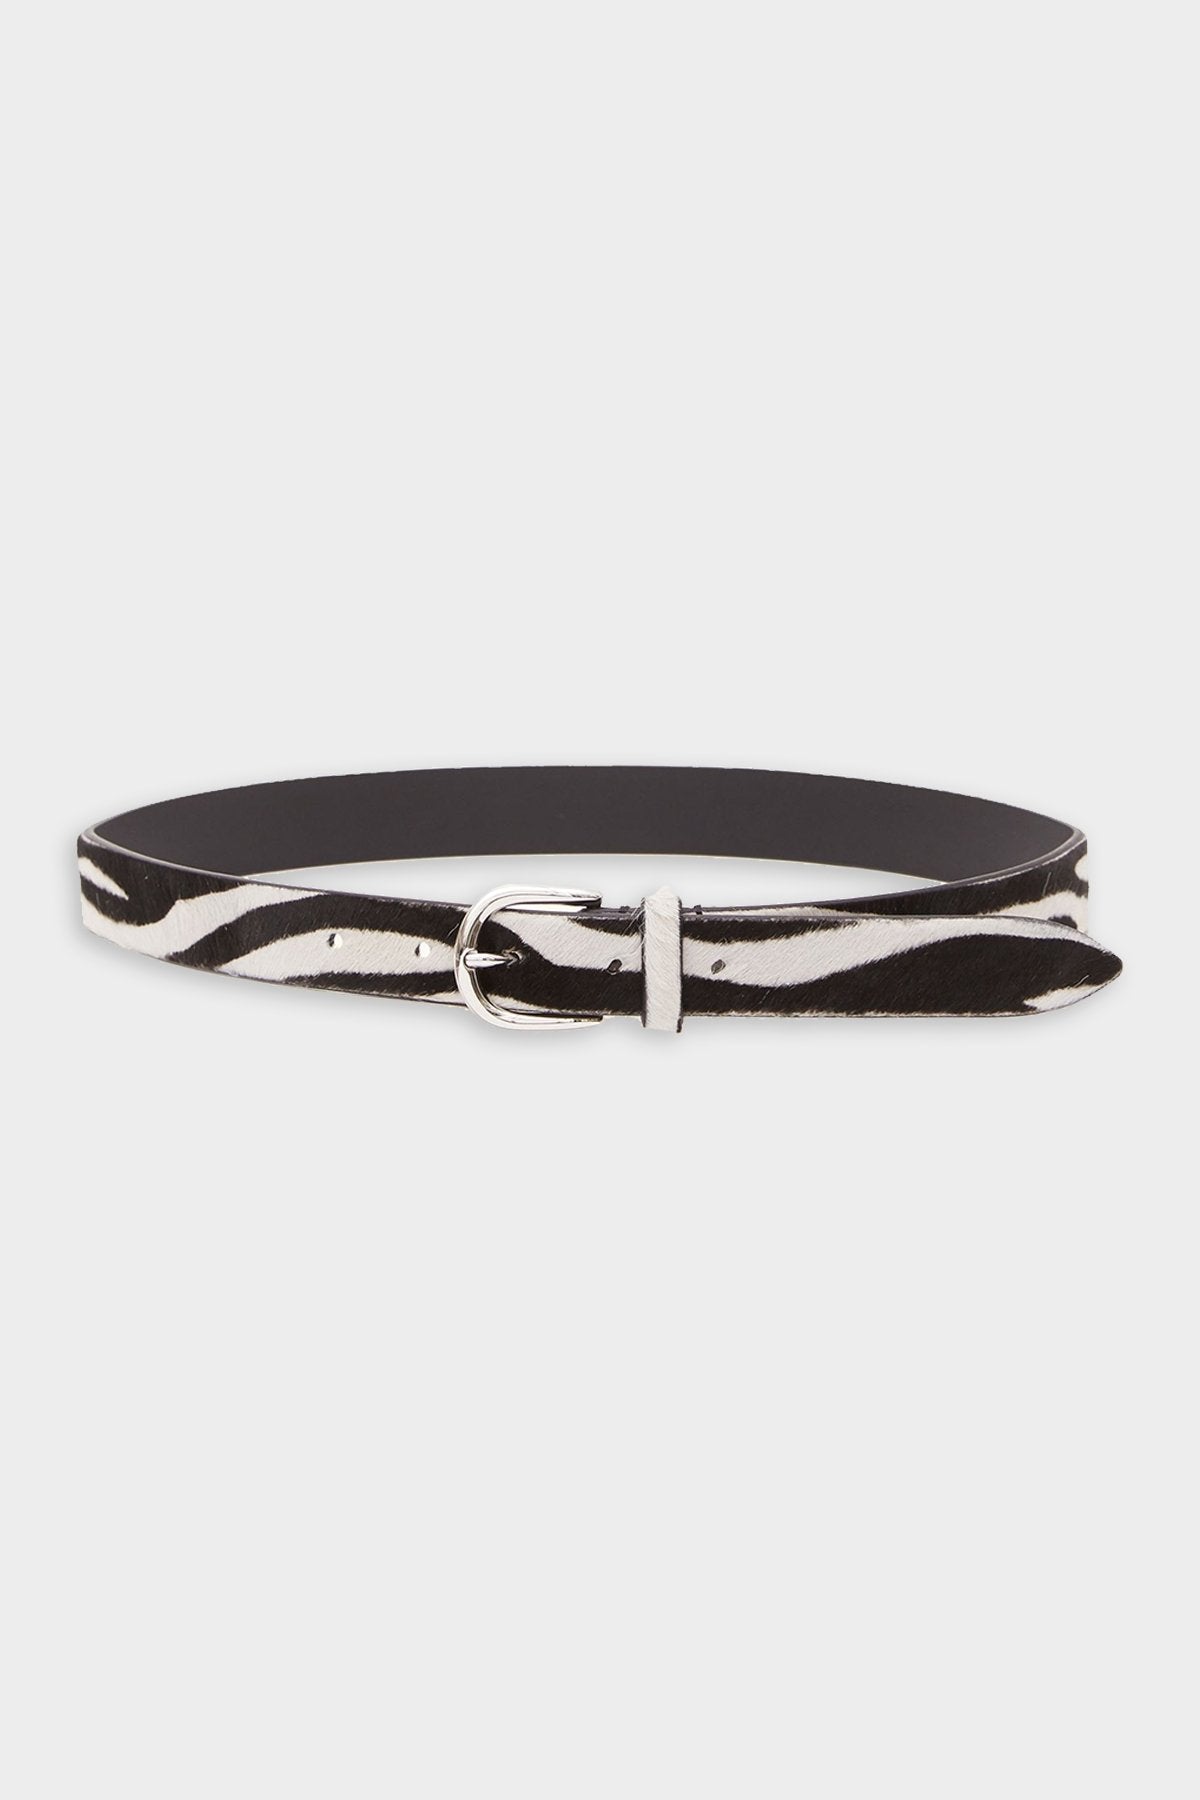 Zap Belt in Black and White - shop-olivia.com